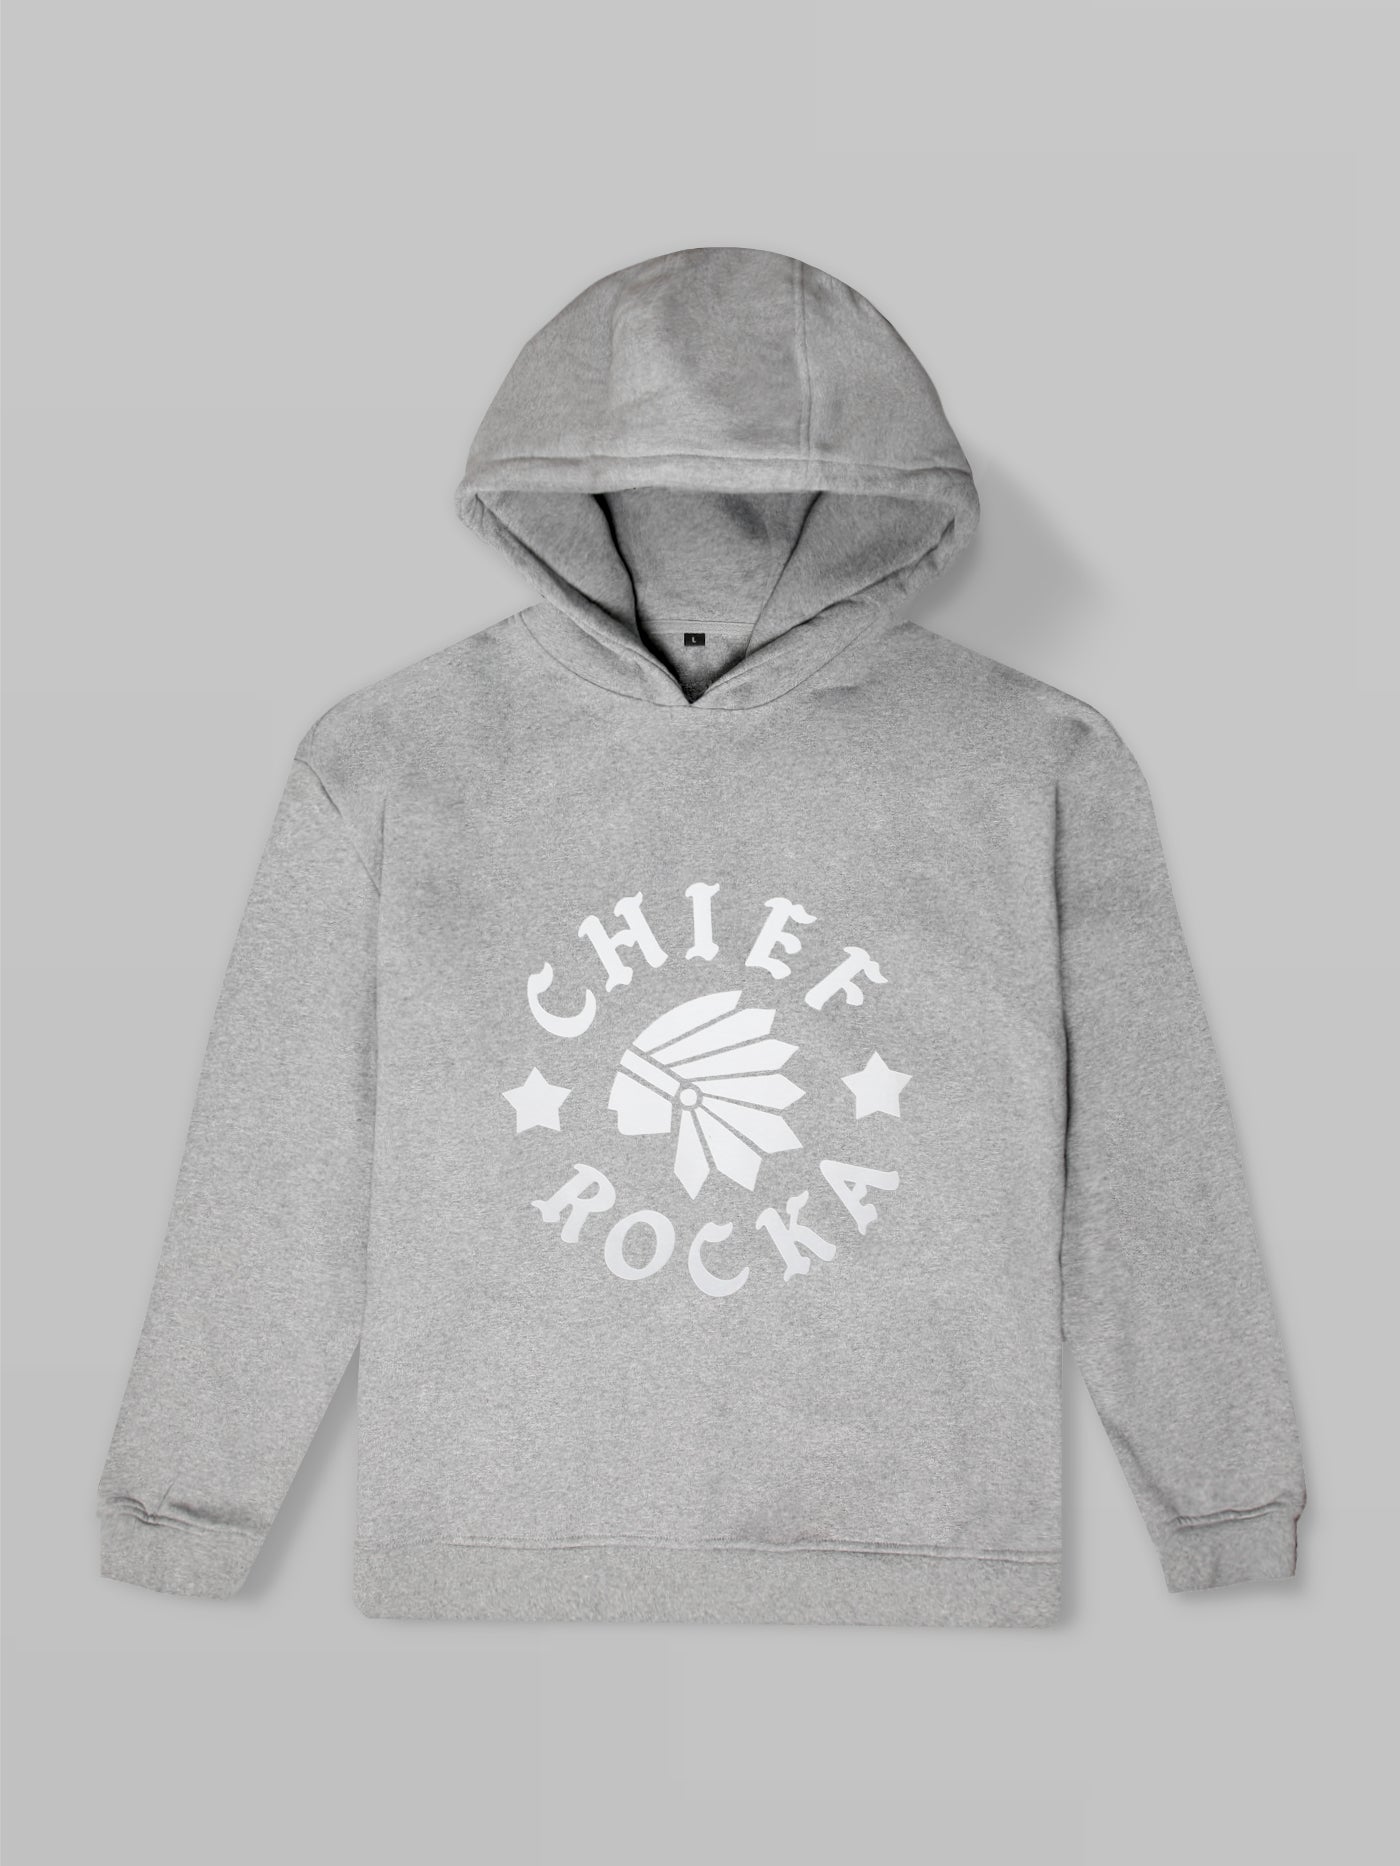 'Classic Chief Rocka' Oversize Hoodie Grey